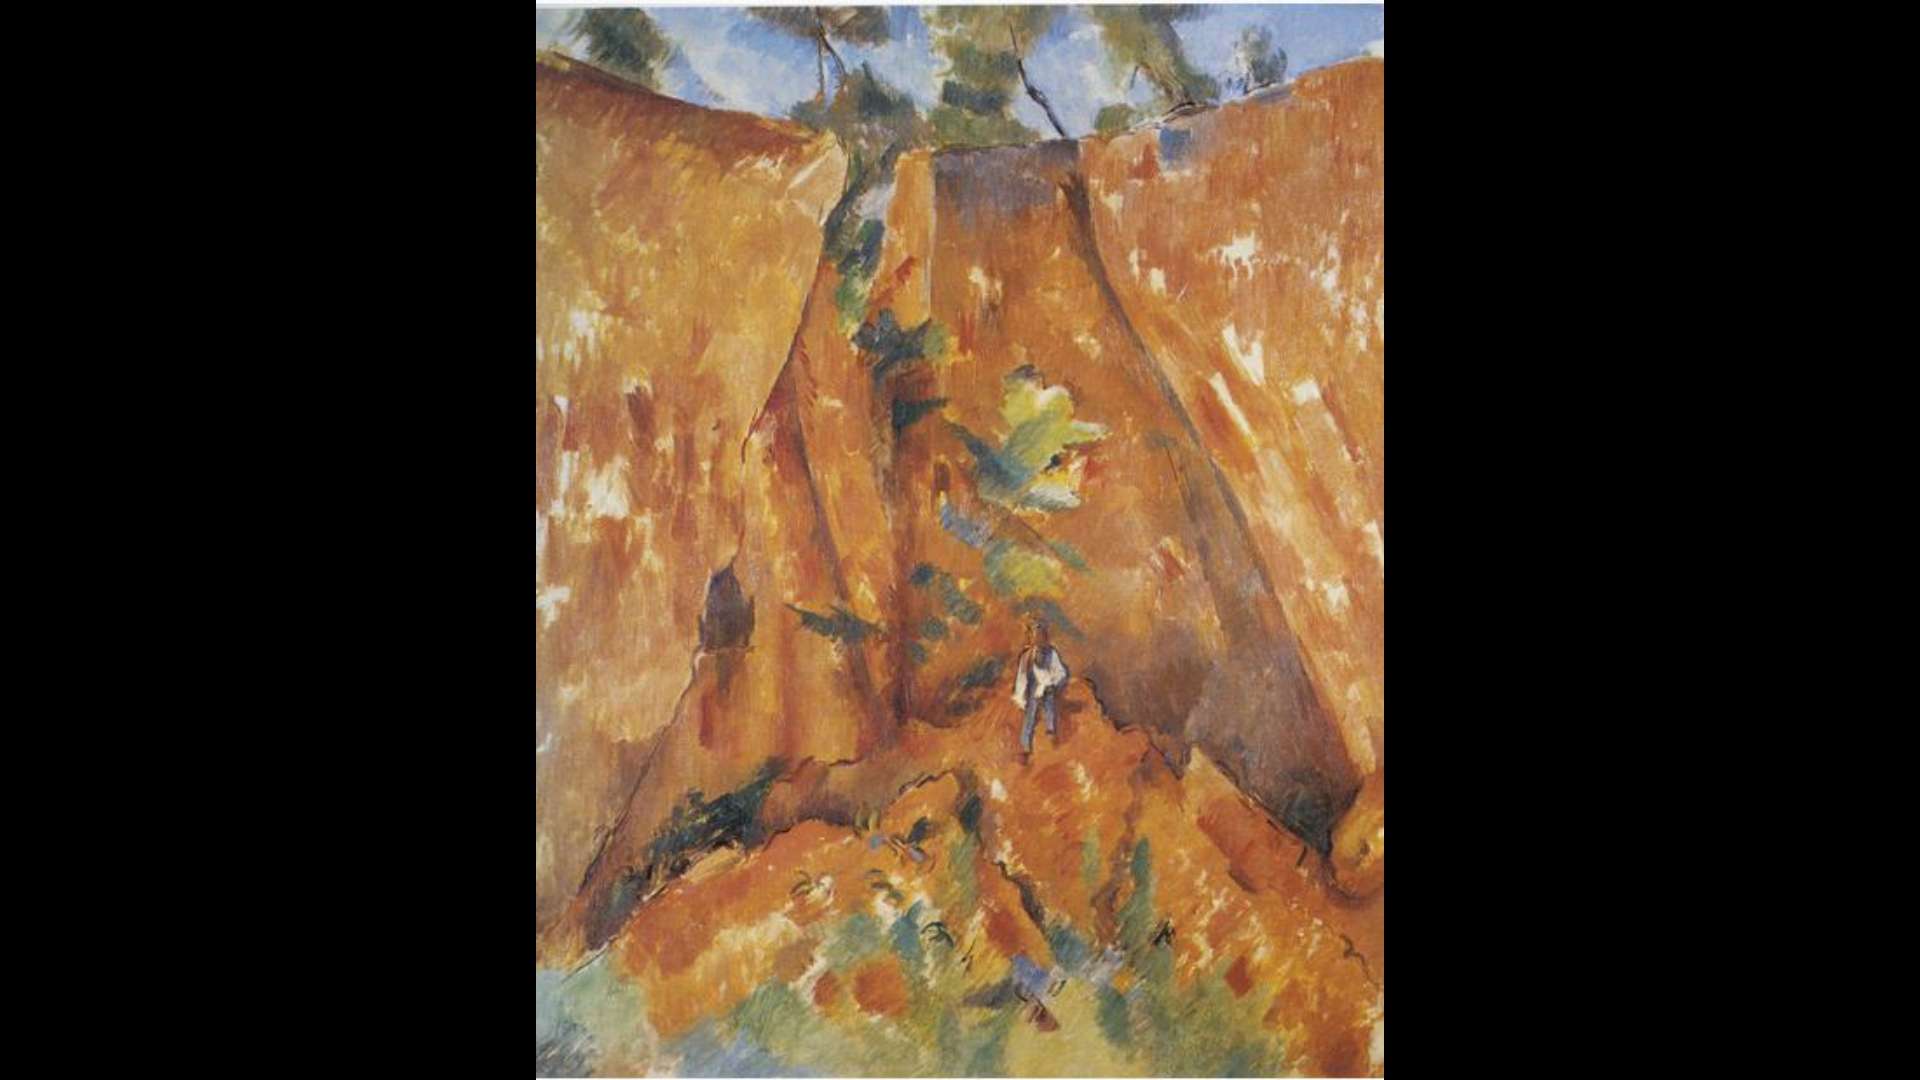 Paul Cézanne, IN THE BIBEMUS QUARRY, circa 1895, oil on canvas, 79 x 63,5 cm, private collection.